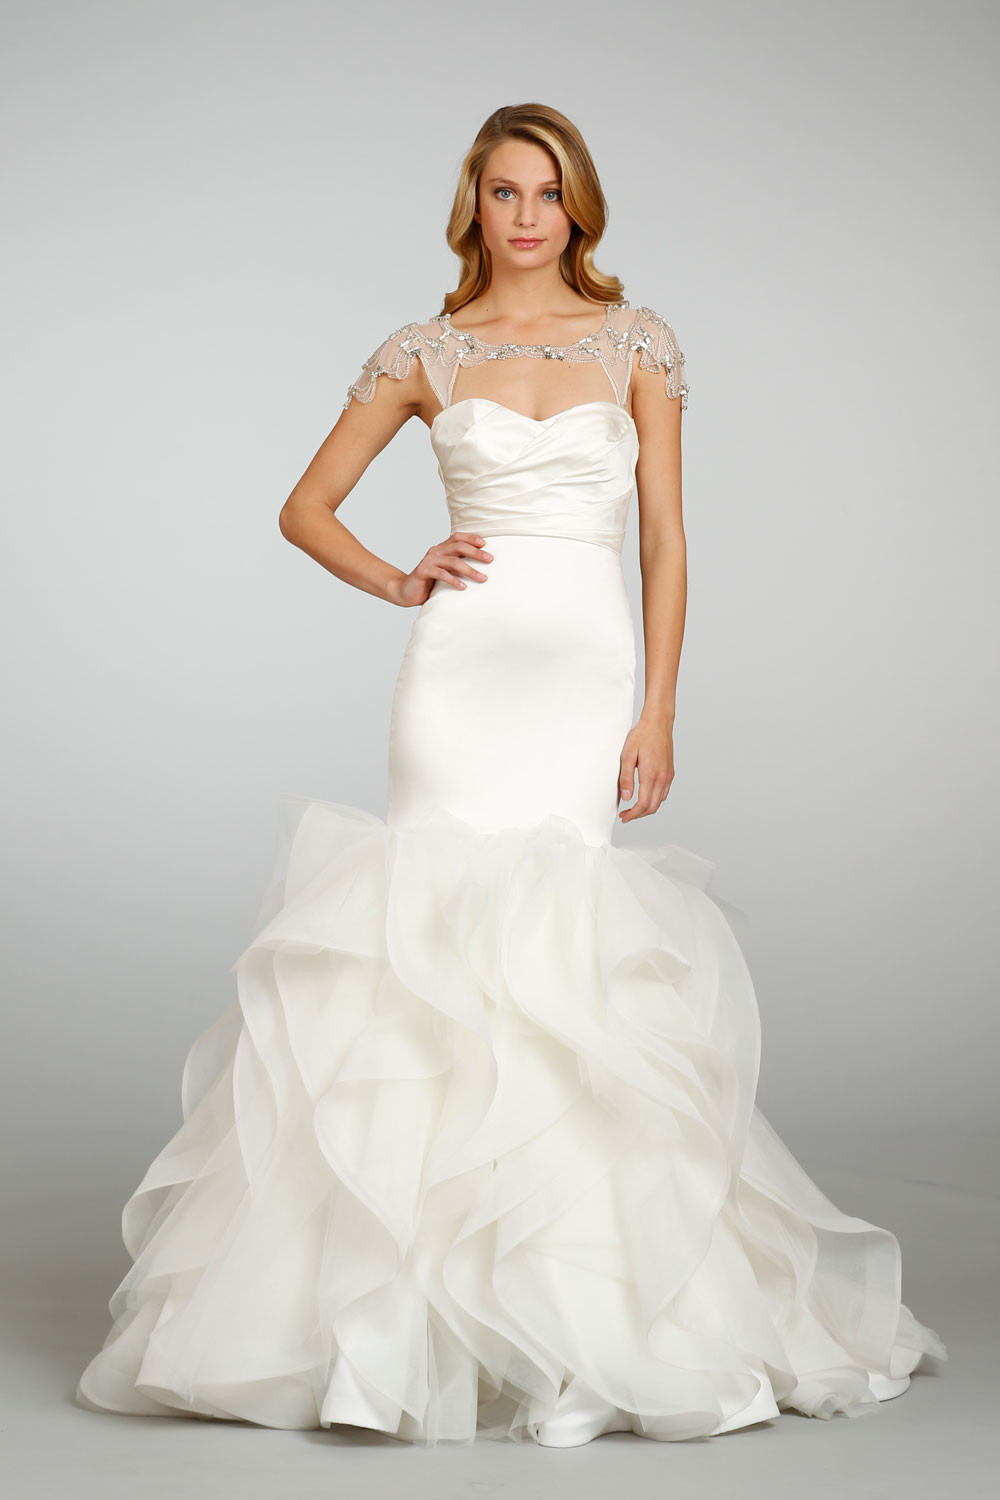 Sheer Wedding Gowns
 2013 Wedding Dress Trends Bridal Separates Sheer Shrug